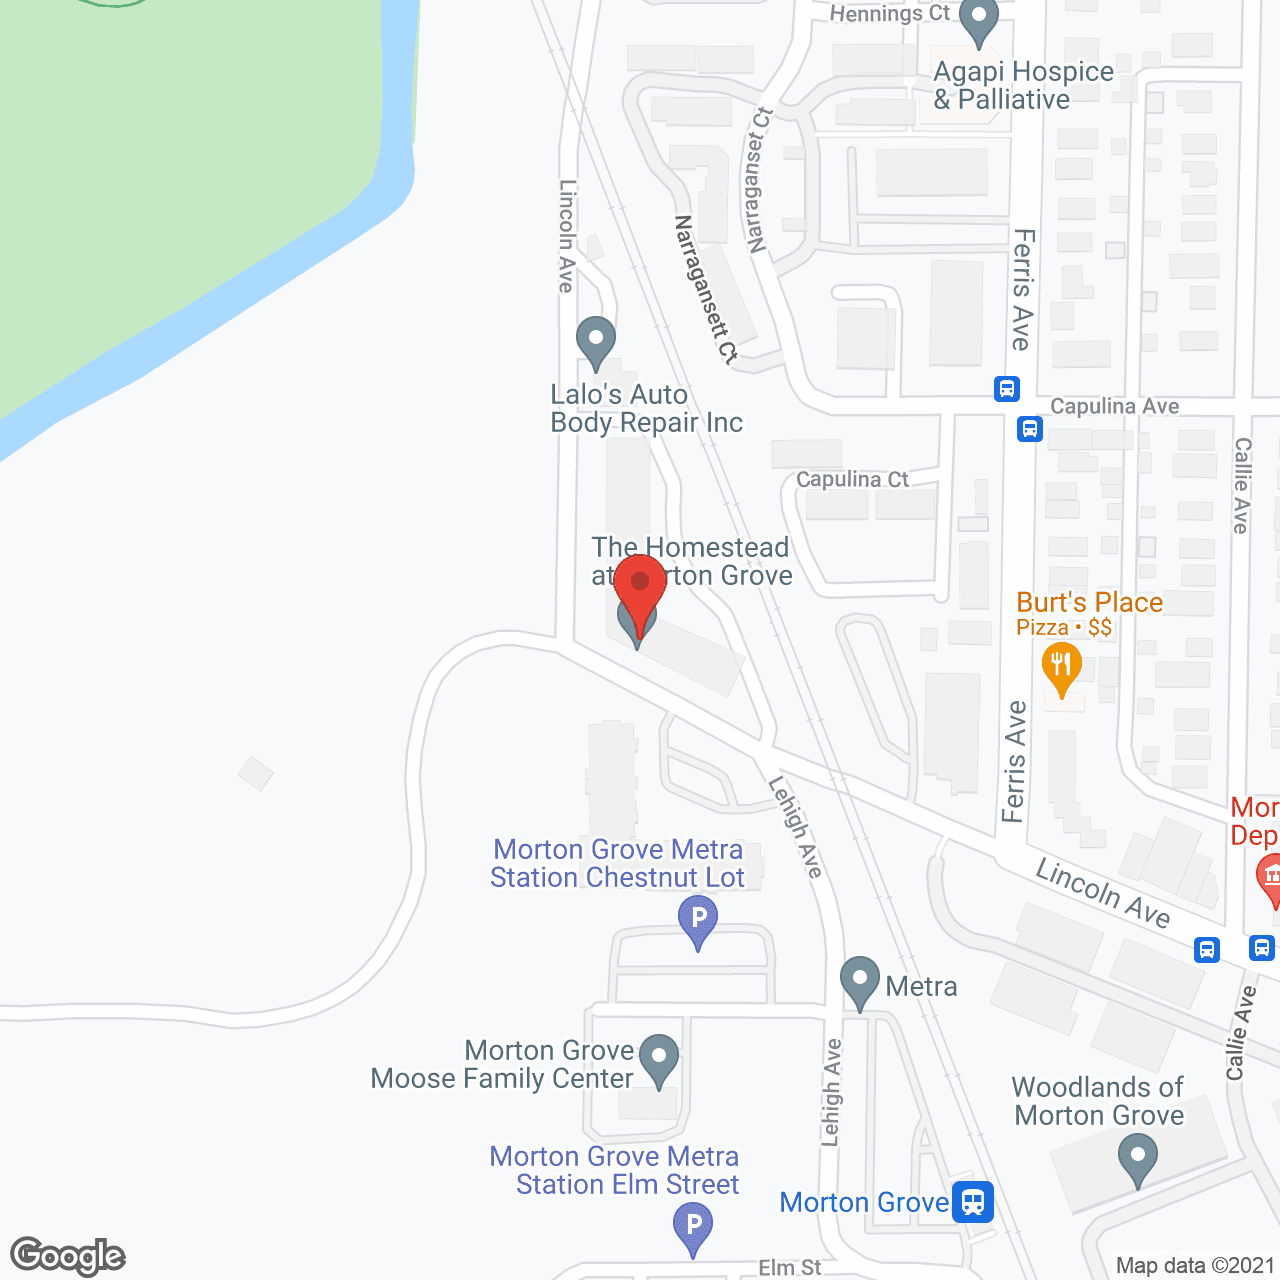 The Homestead at Morton Grove in google map